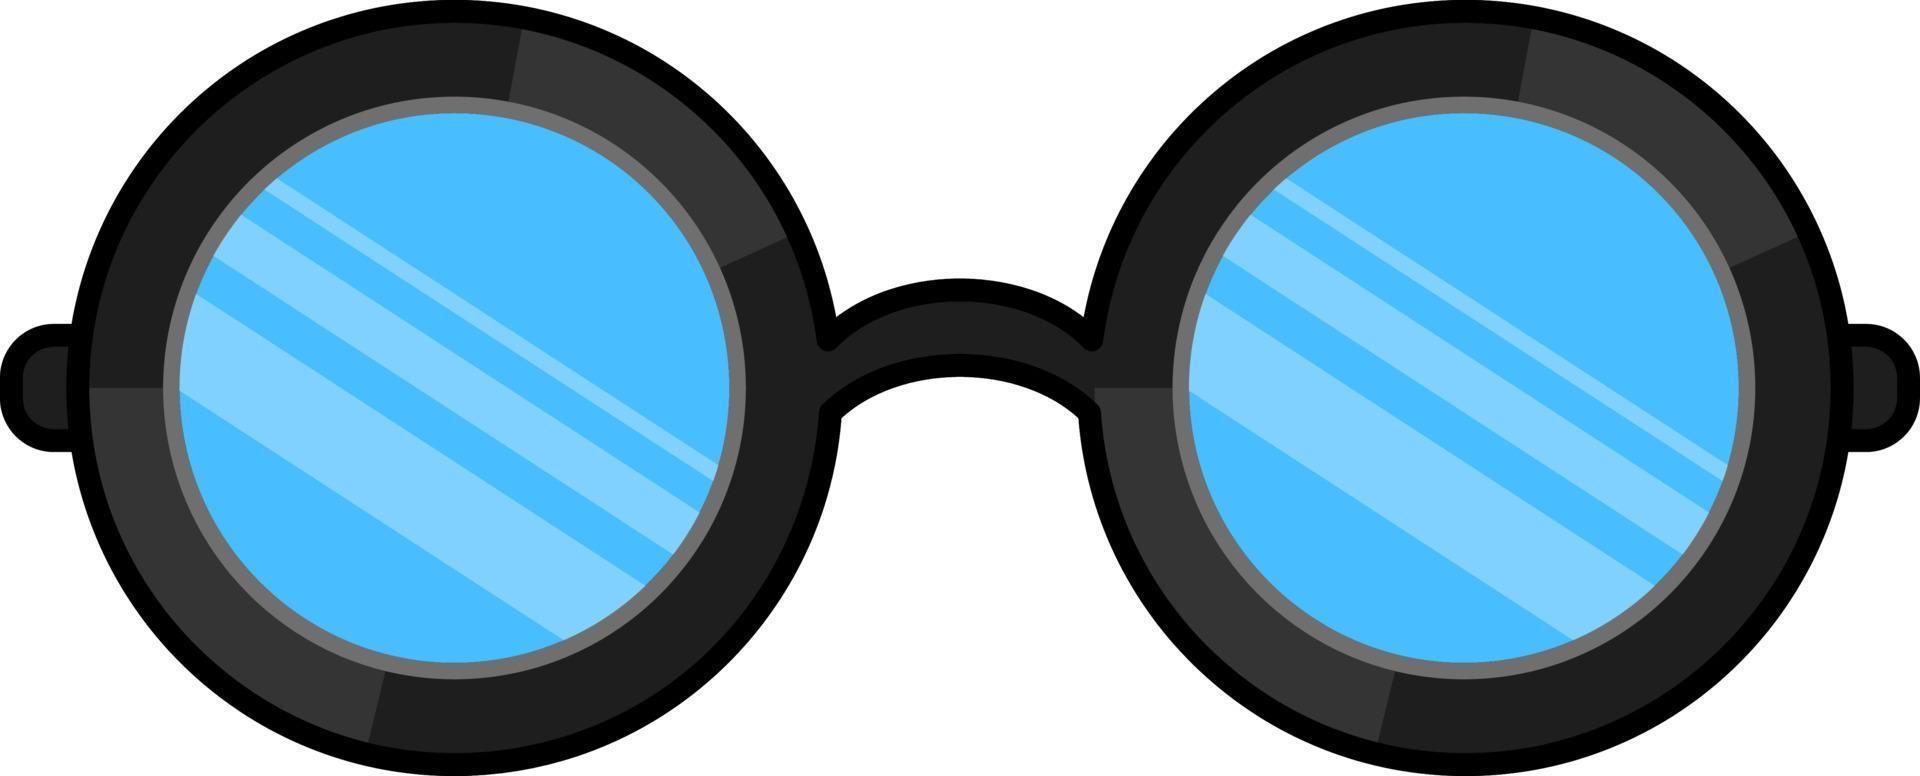 Glasses Icon, elements for design. Glasses Icon on white background. Vector illustration